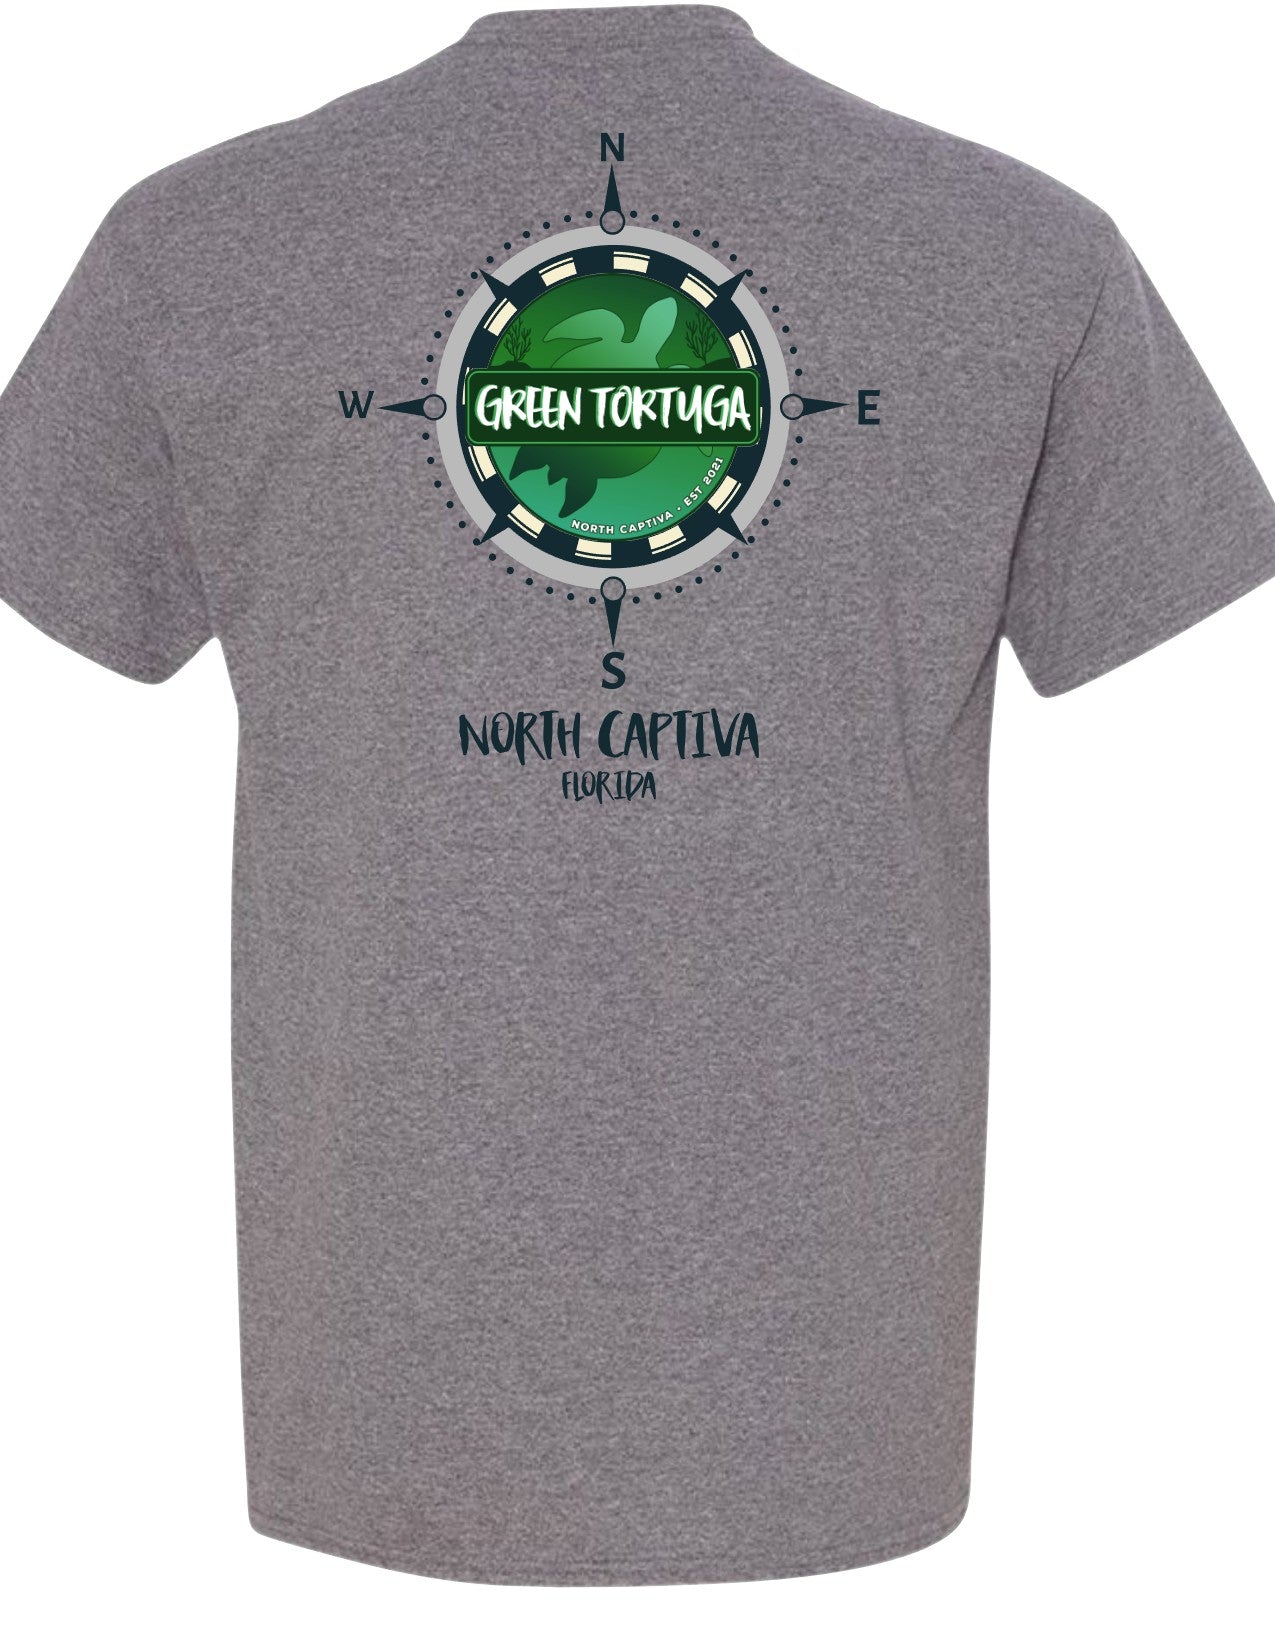 Tortuga Short Sleeve Adult T-Shirt Graphite Grey